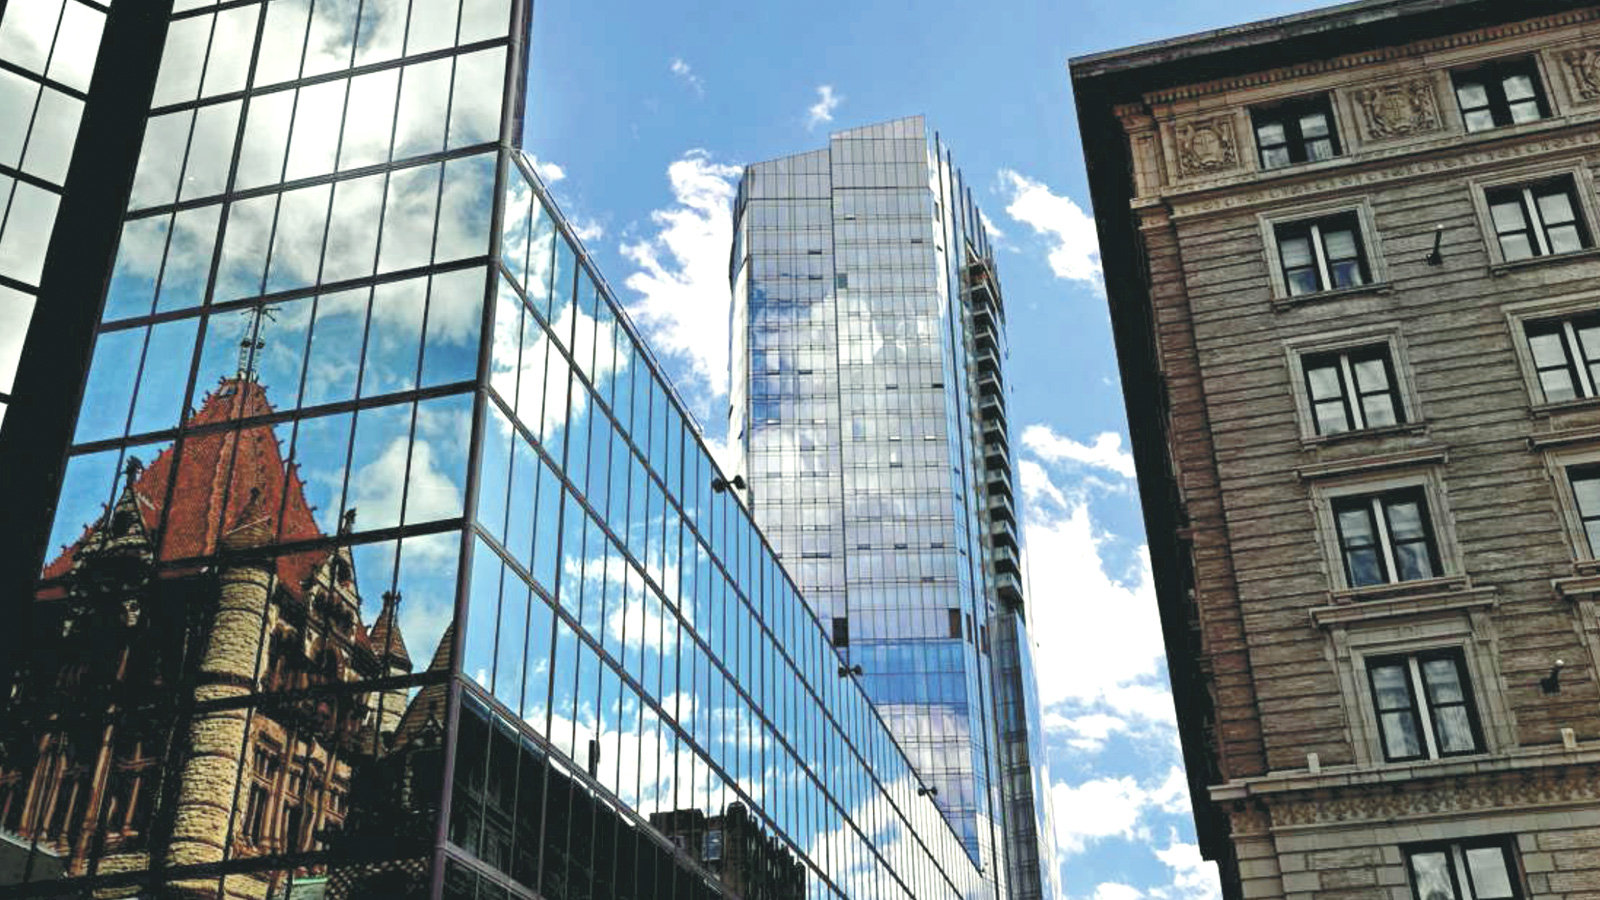 Raffles tower from Boston Globe article